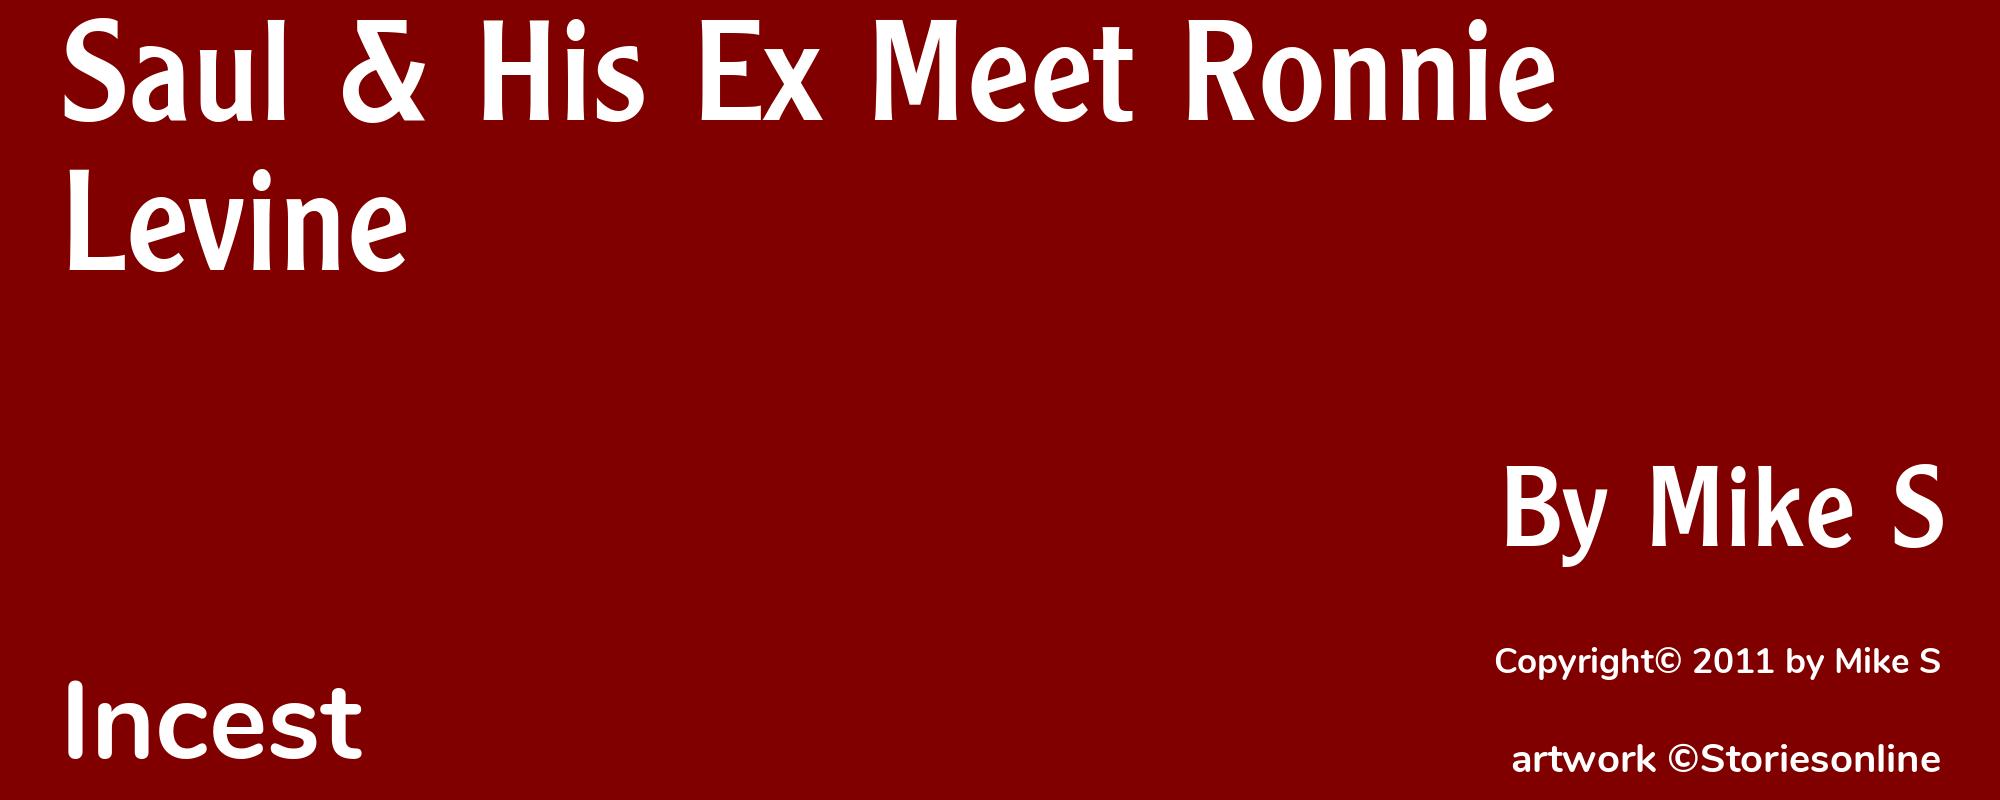 Saul & His Ex Meet Ronnie Levine - Cover